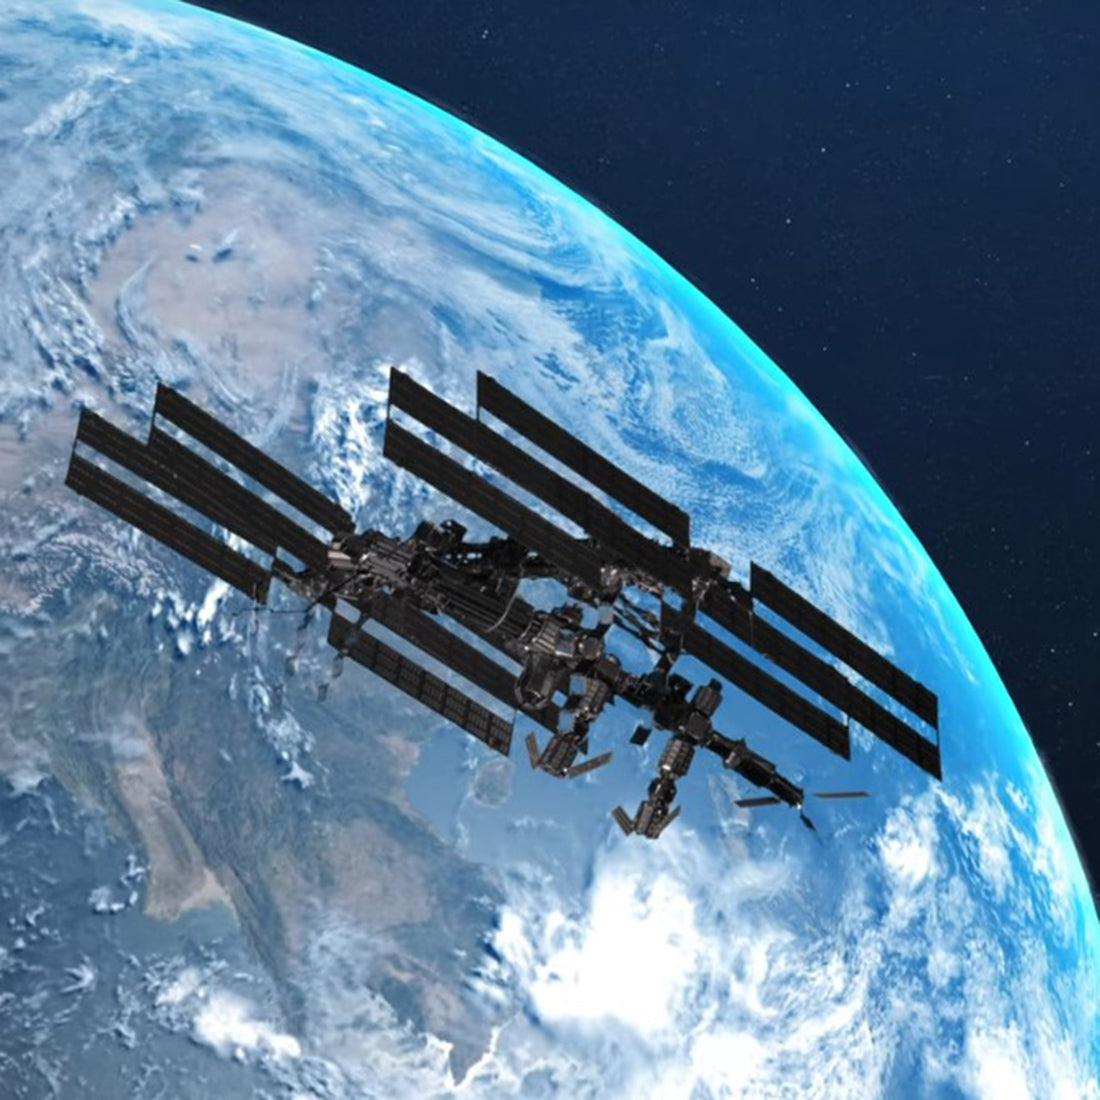 250pcs 3D Metal International Space Station Model Building Kit-Astronauts Lodge